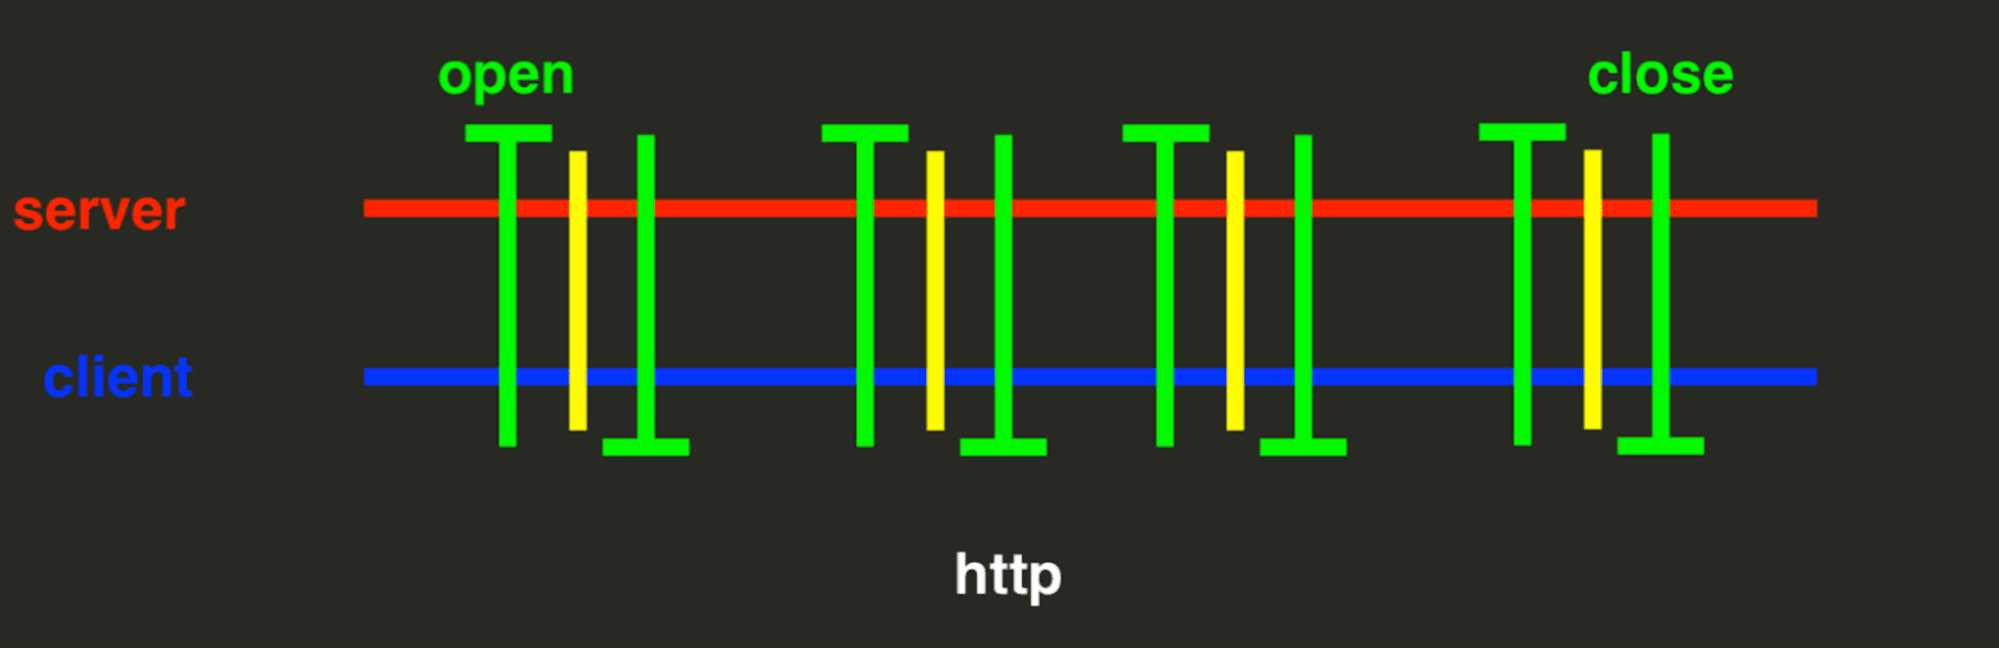 http protocol schema client server colors - image9.png